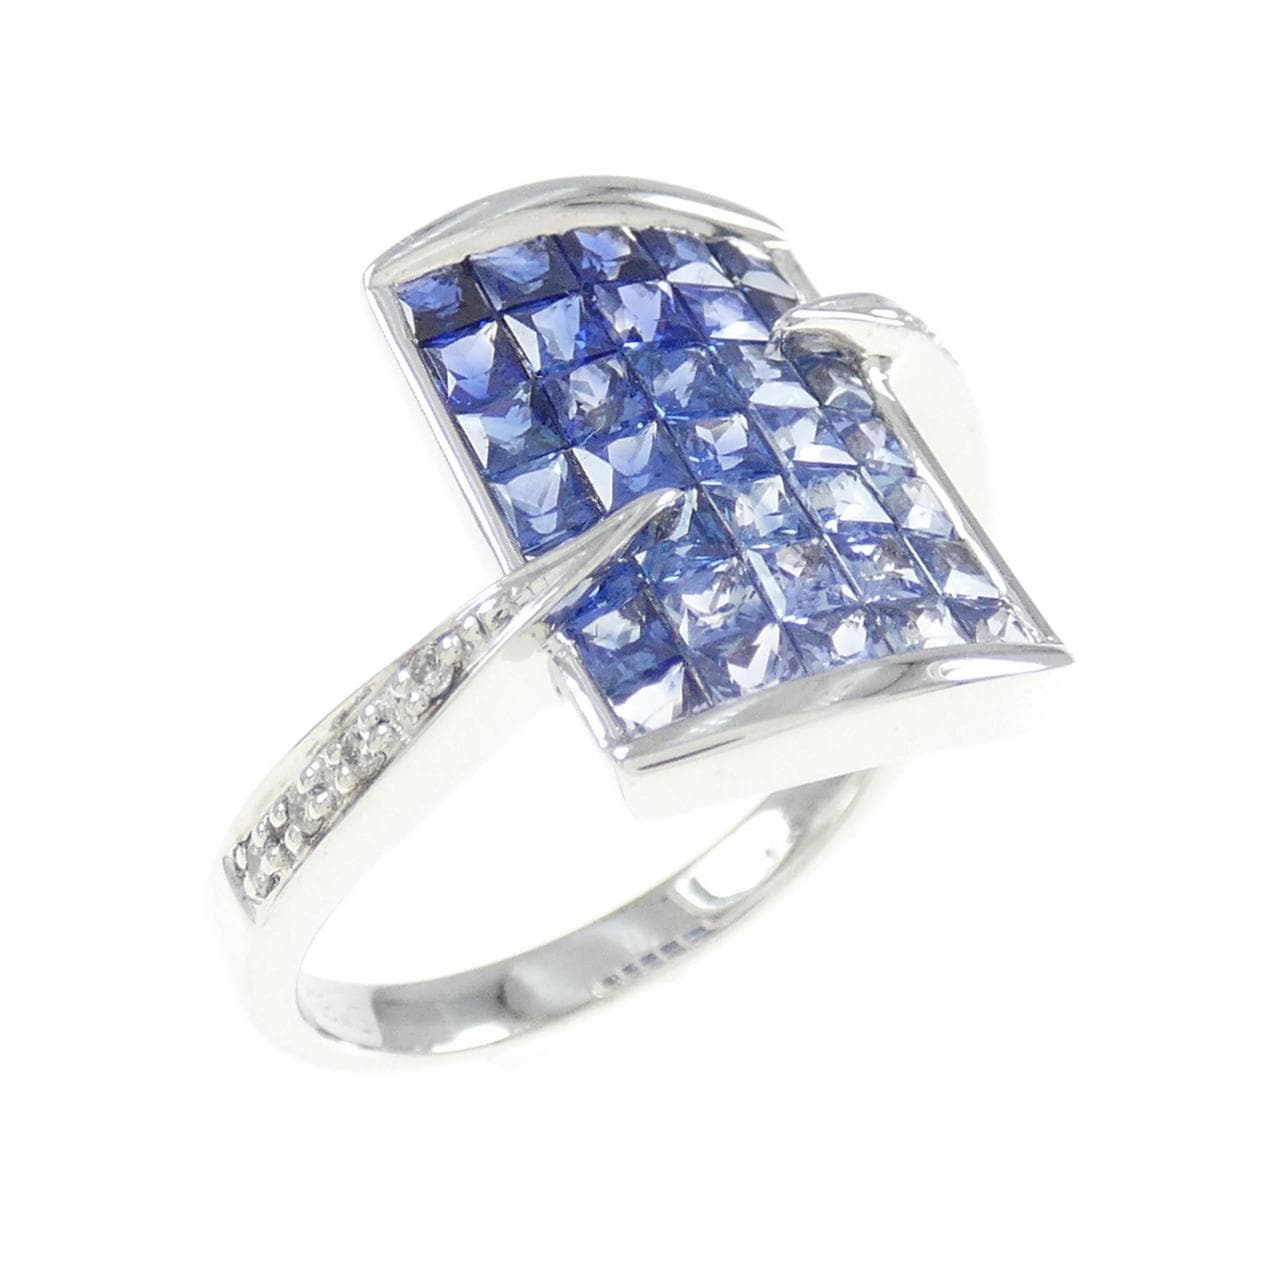 K18WG Sapphire Ring 1.75CT